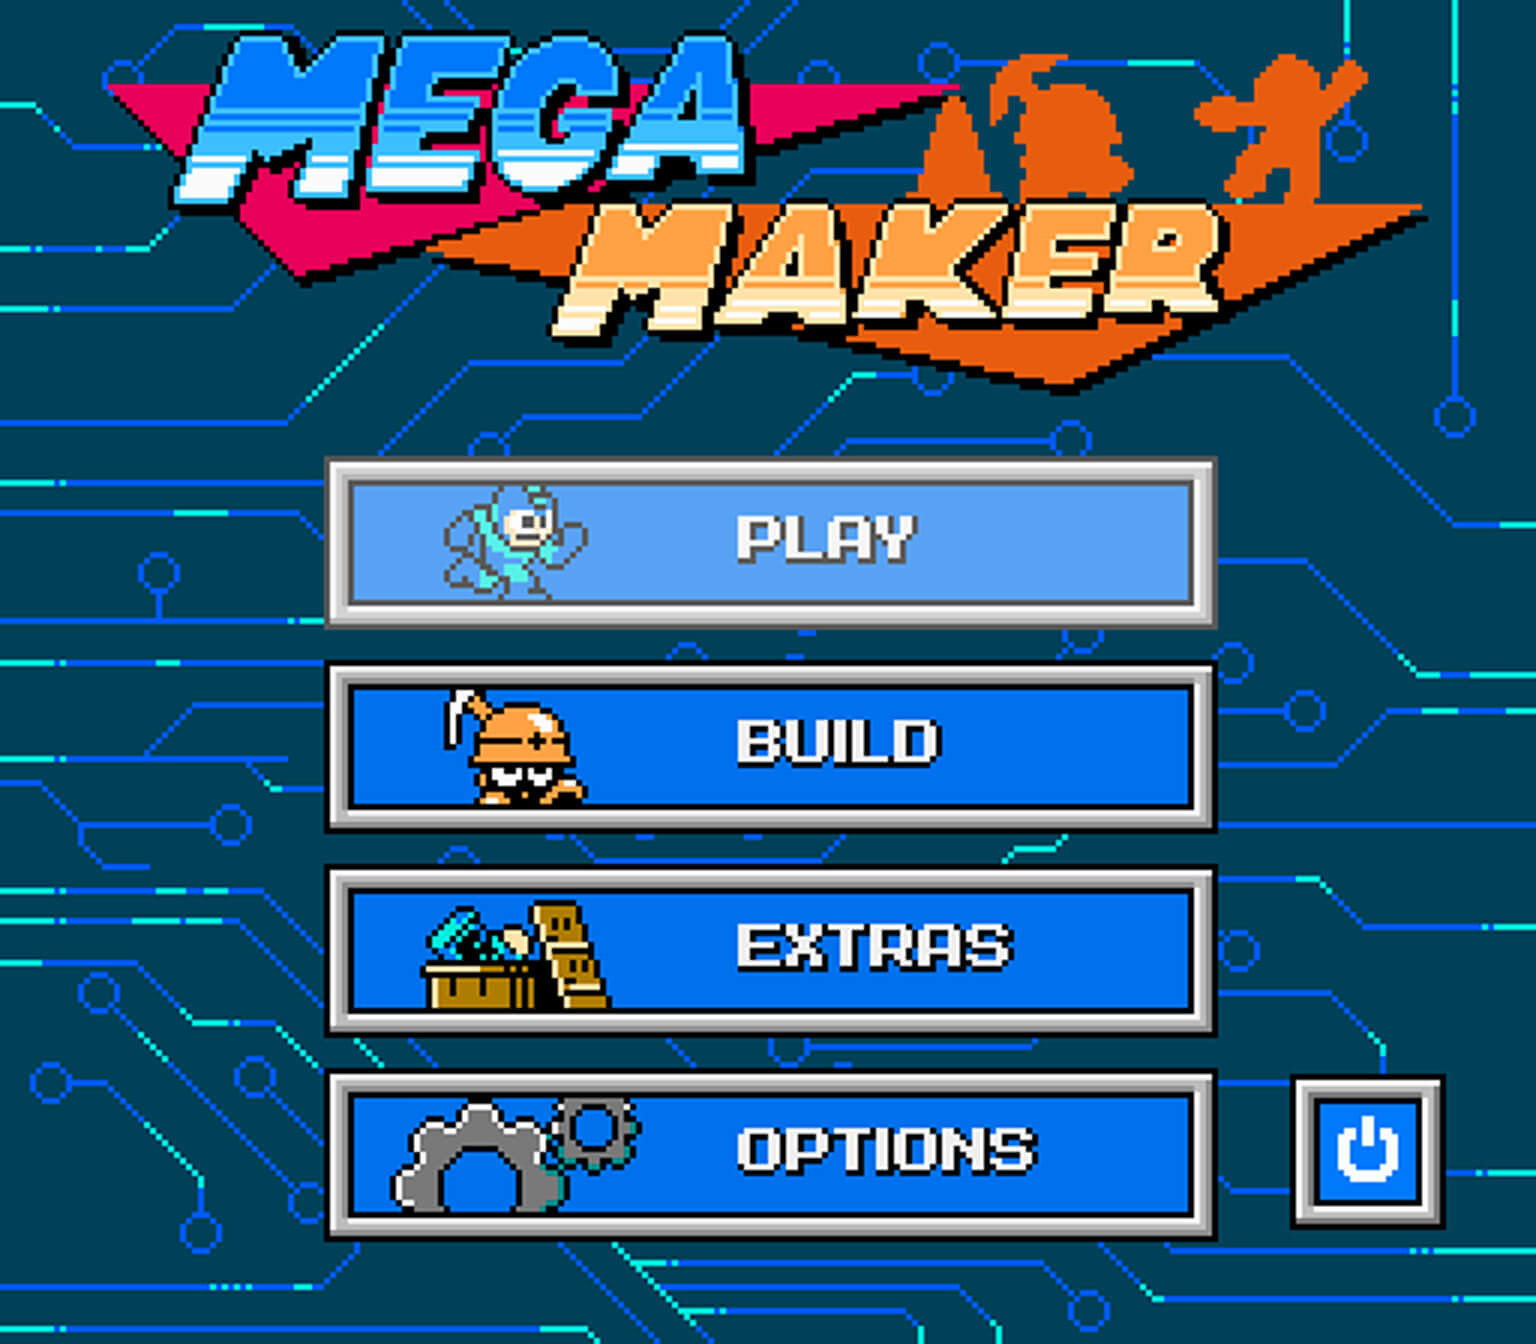 Mega Maker